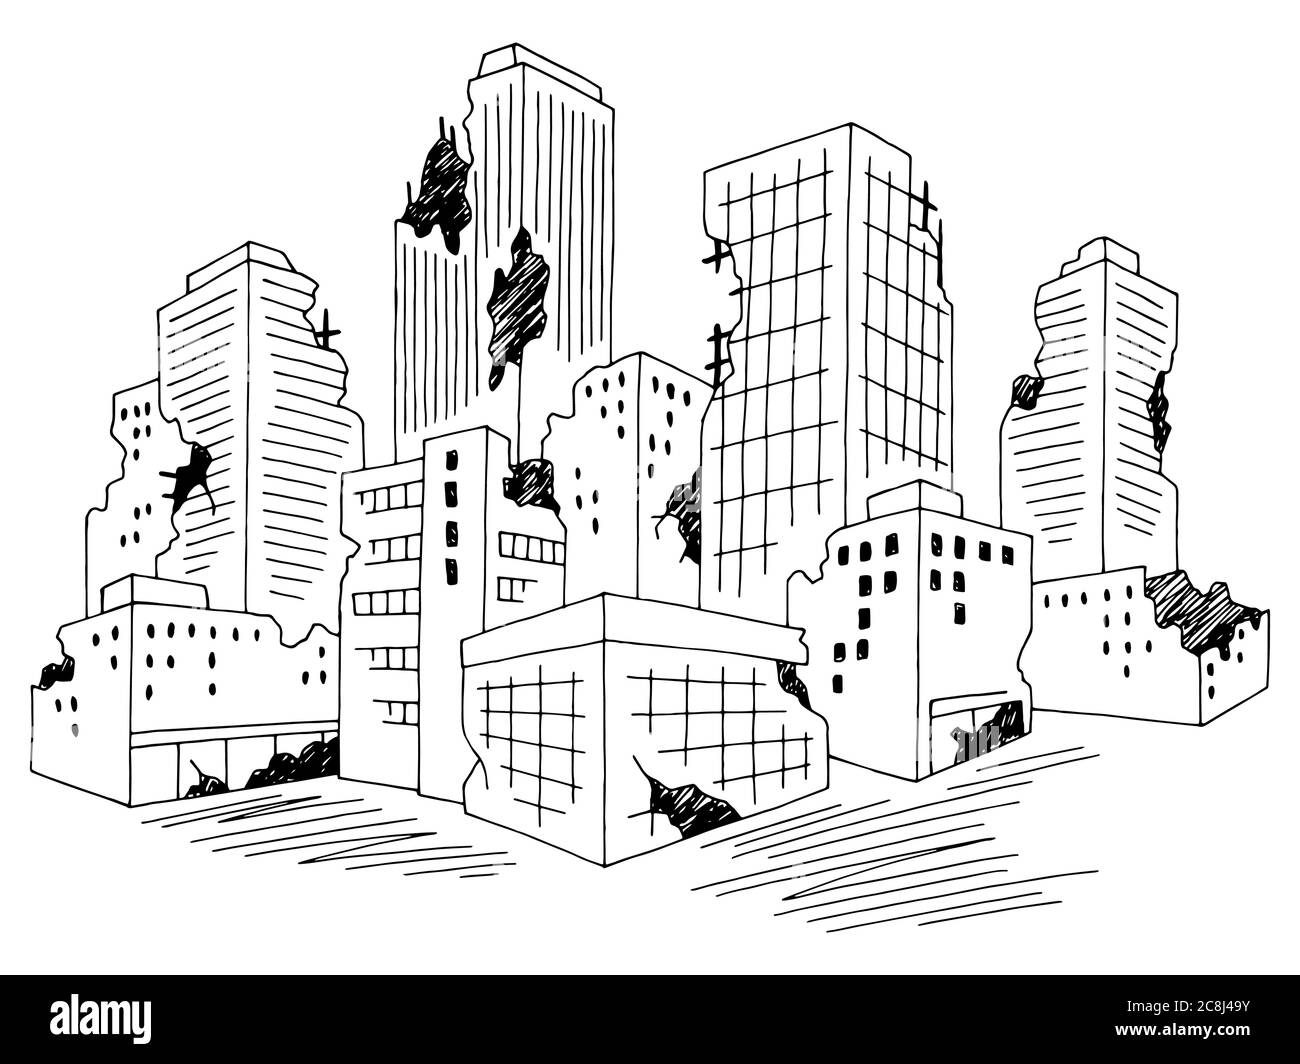 Ruined City Grafik schwarz weiß Stadtbild Skyline Skizze Illustration Vektor Stock Vektor